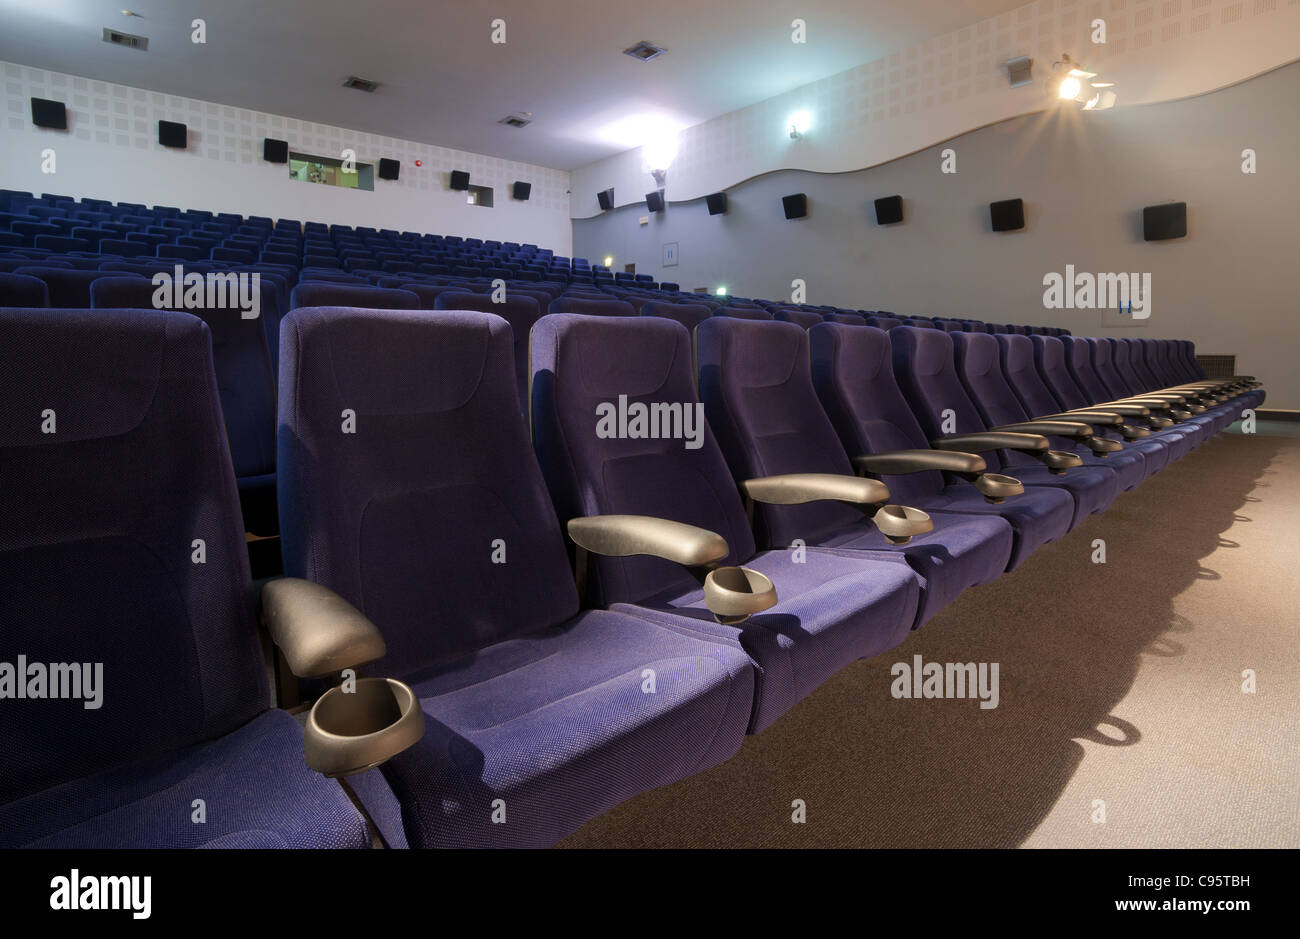 Cinema interior, empty seats, modern design. Stock Photo